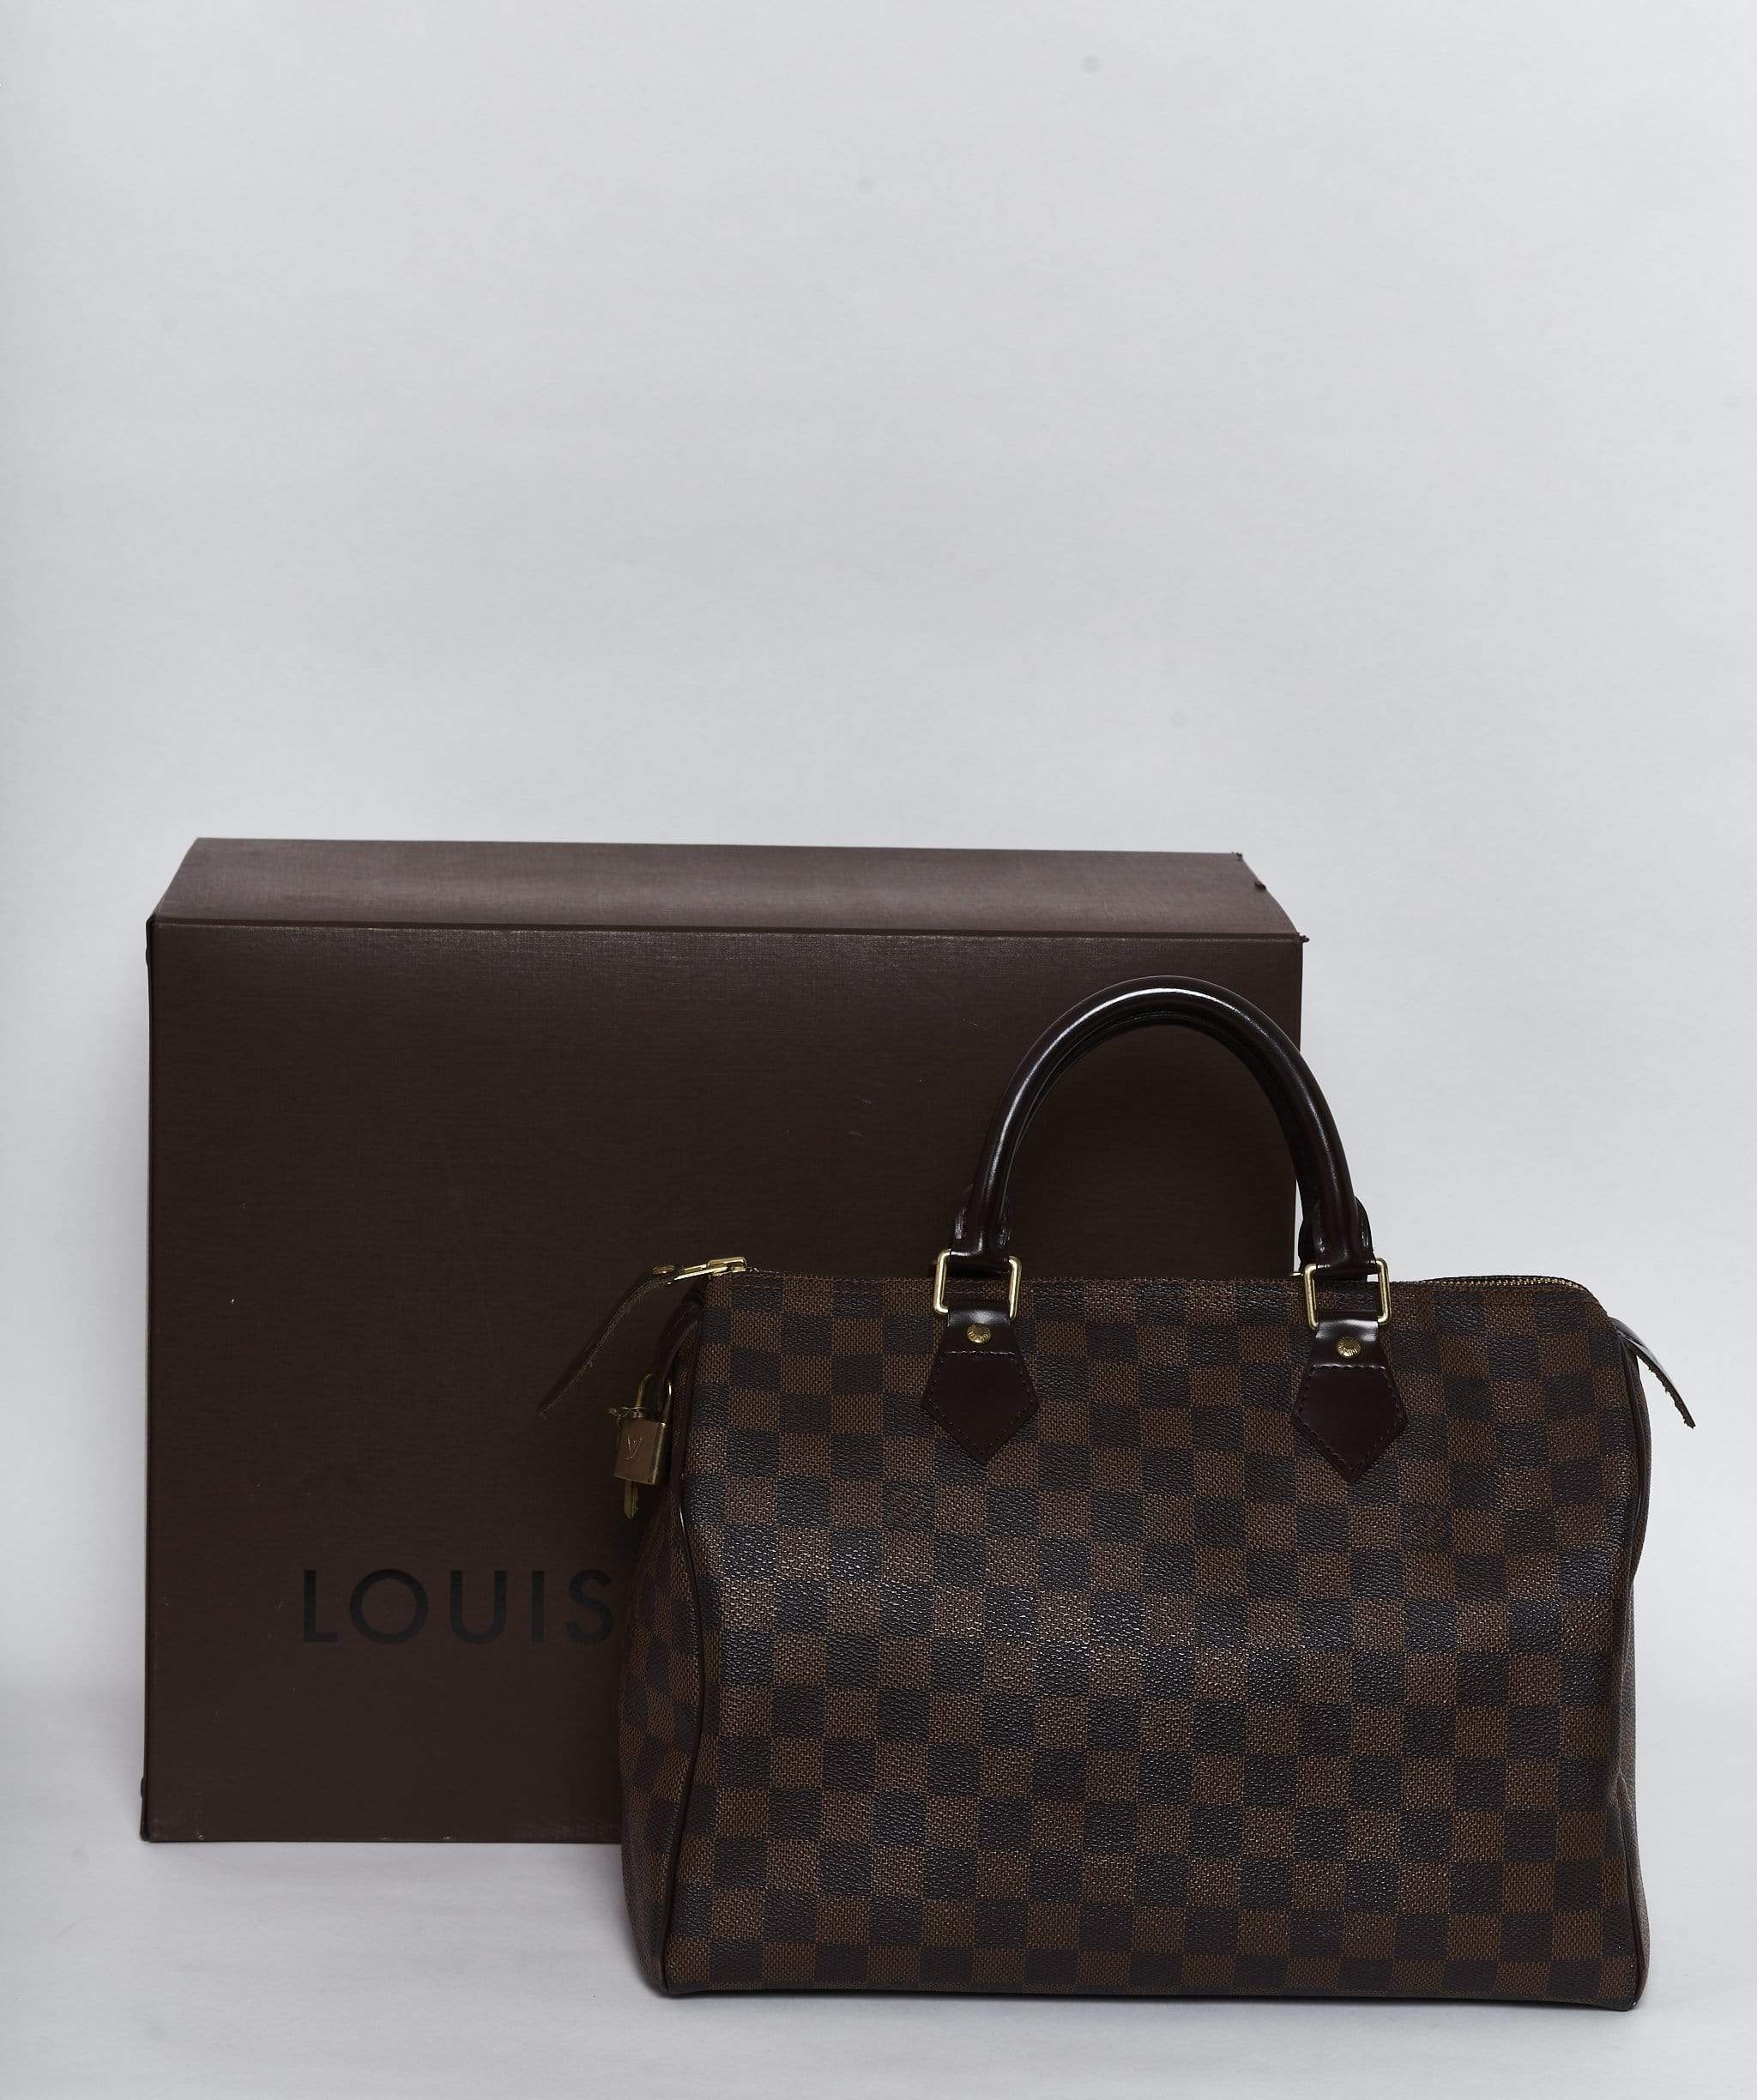 Louis Vuitton Louis Vuitton damier speedy 30